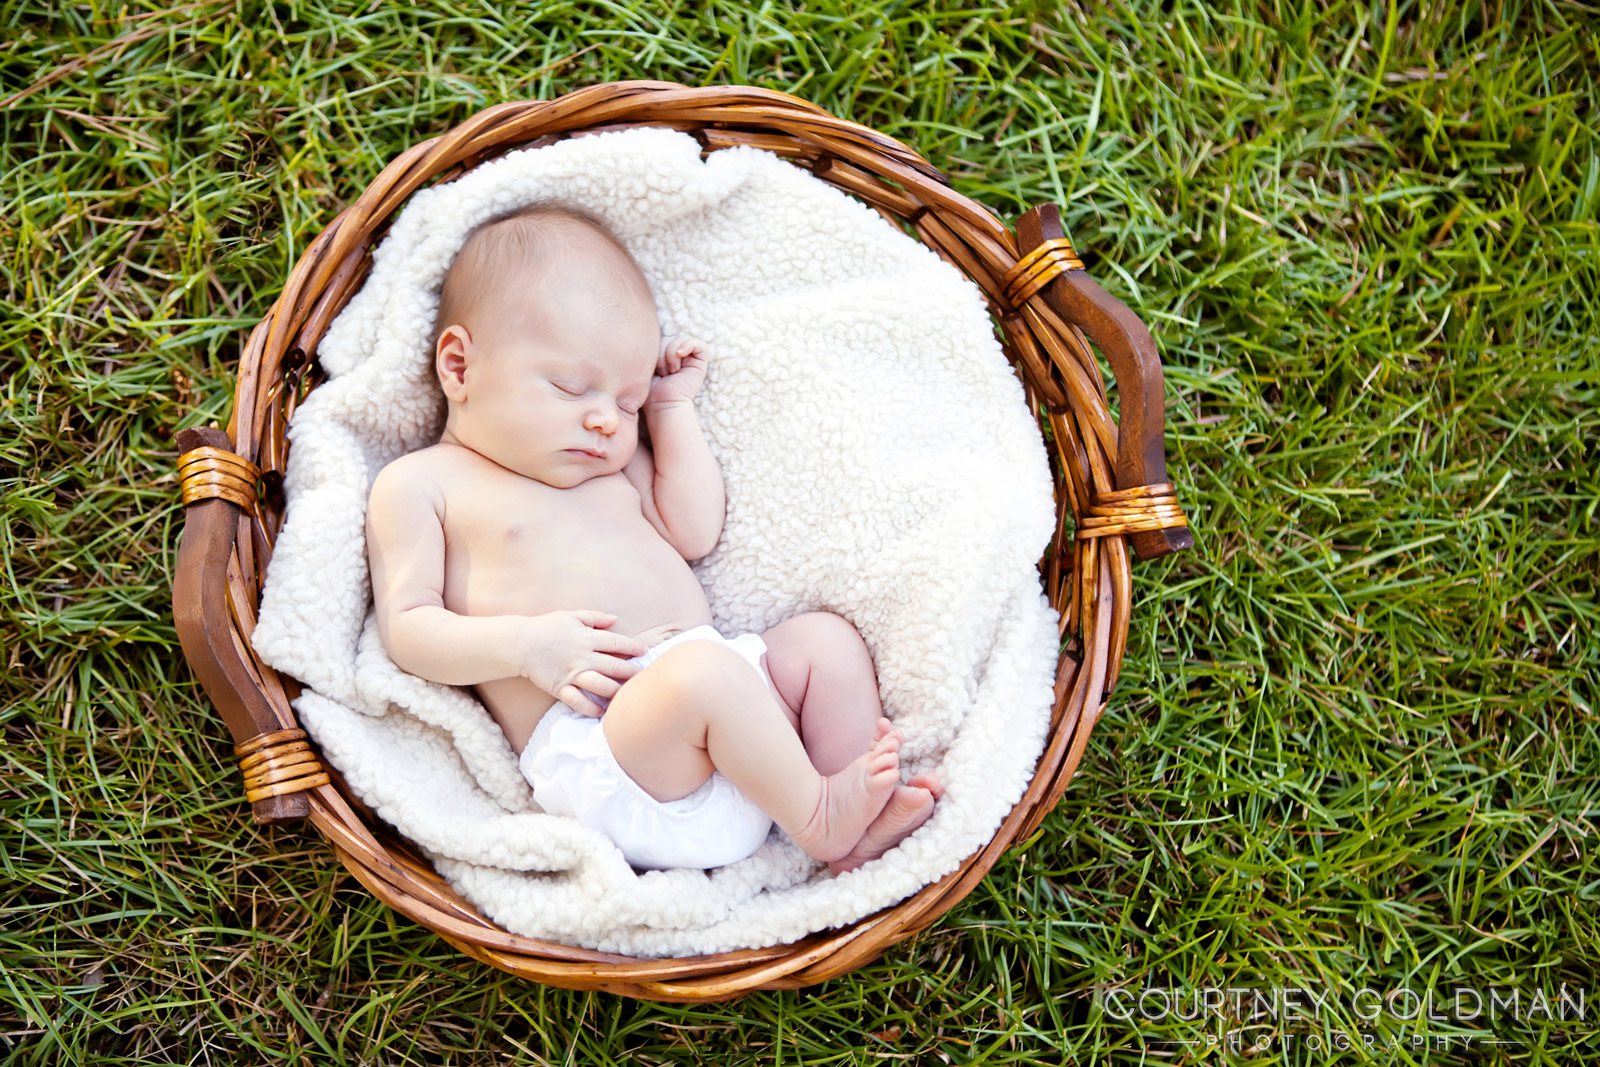 Atlanta Maternity and Newborn Photography by Courtney Goldman 54.jpg